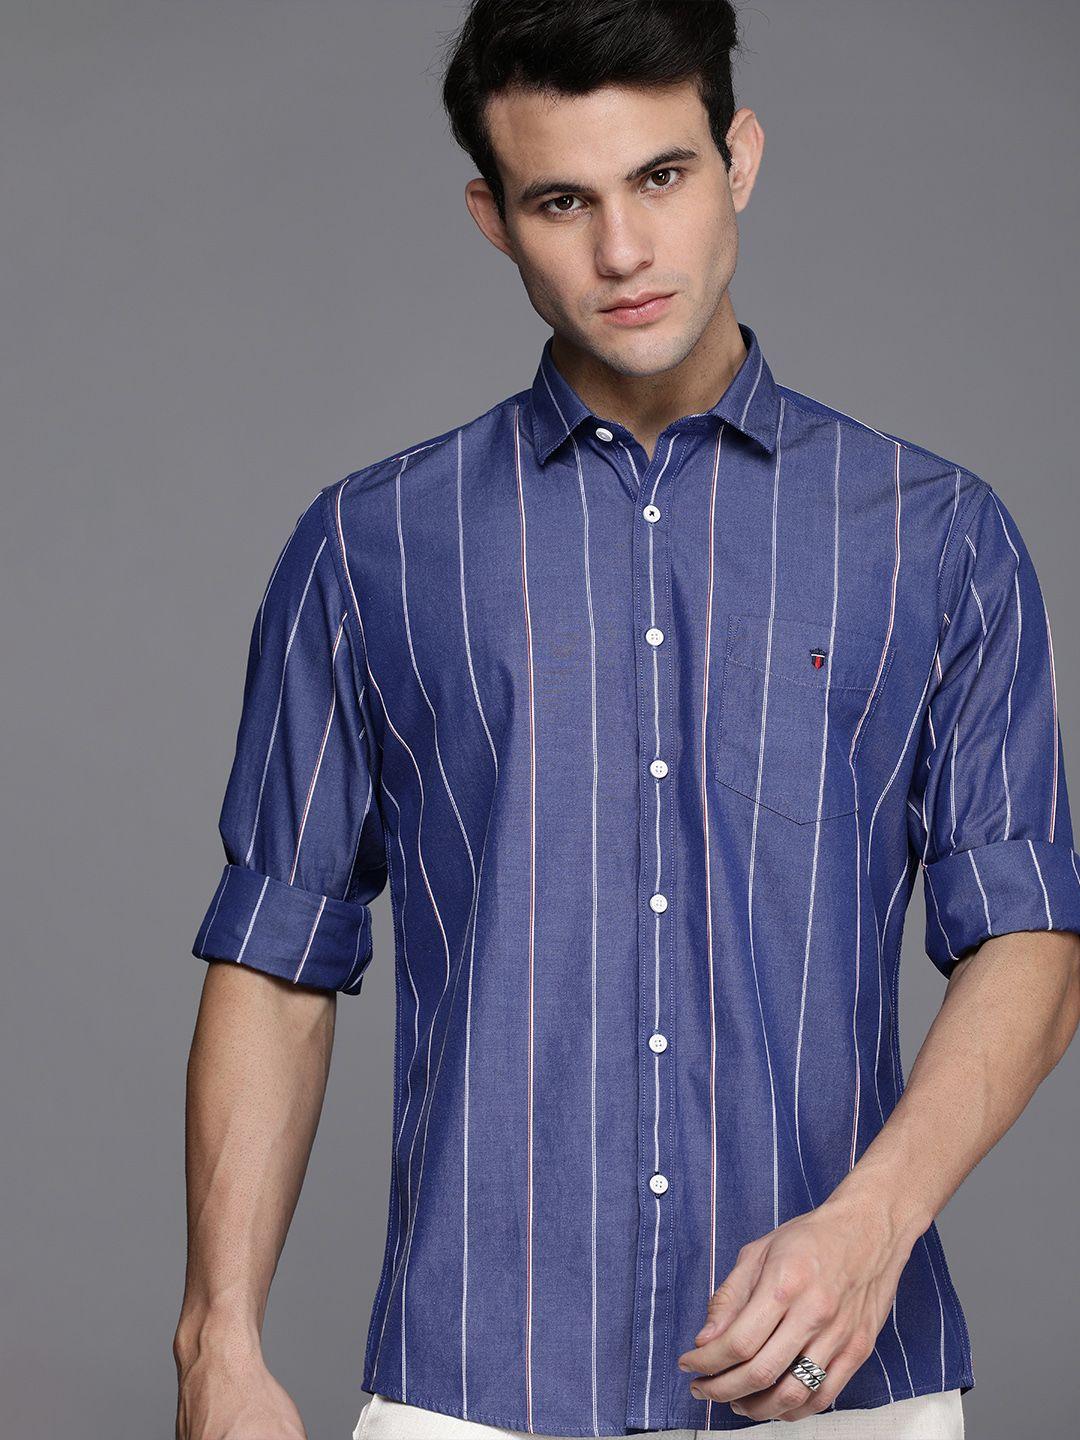 louis philippe sport slim fit vertical stripes pure cotton casual shirt